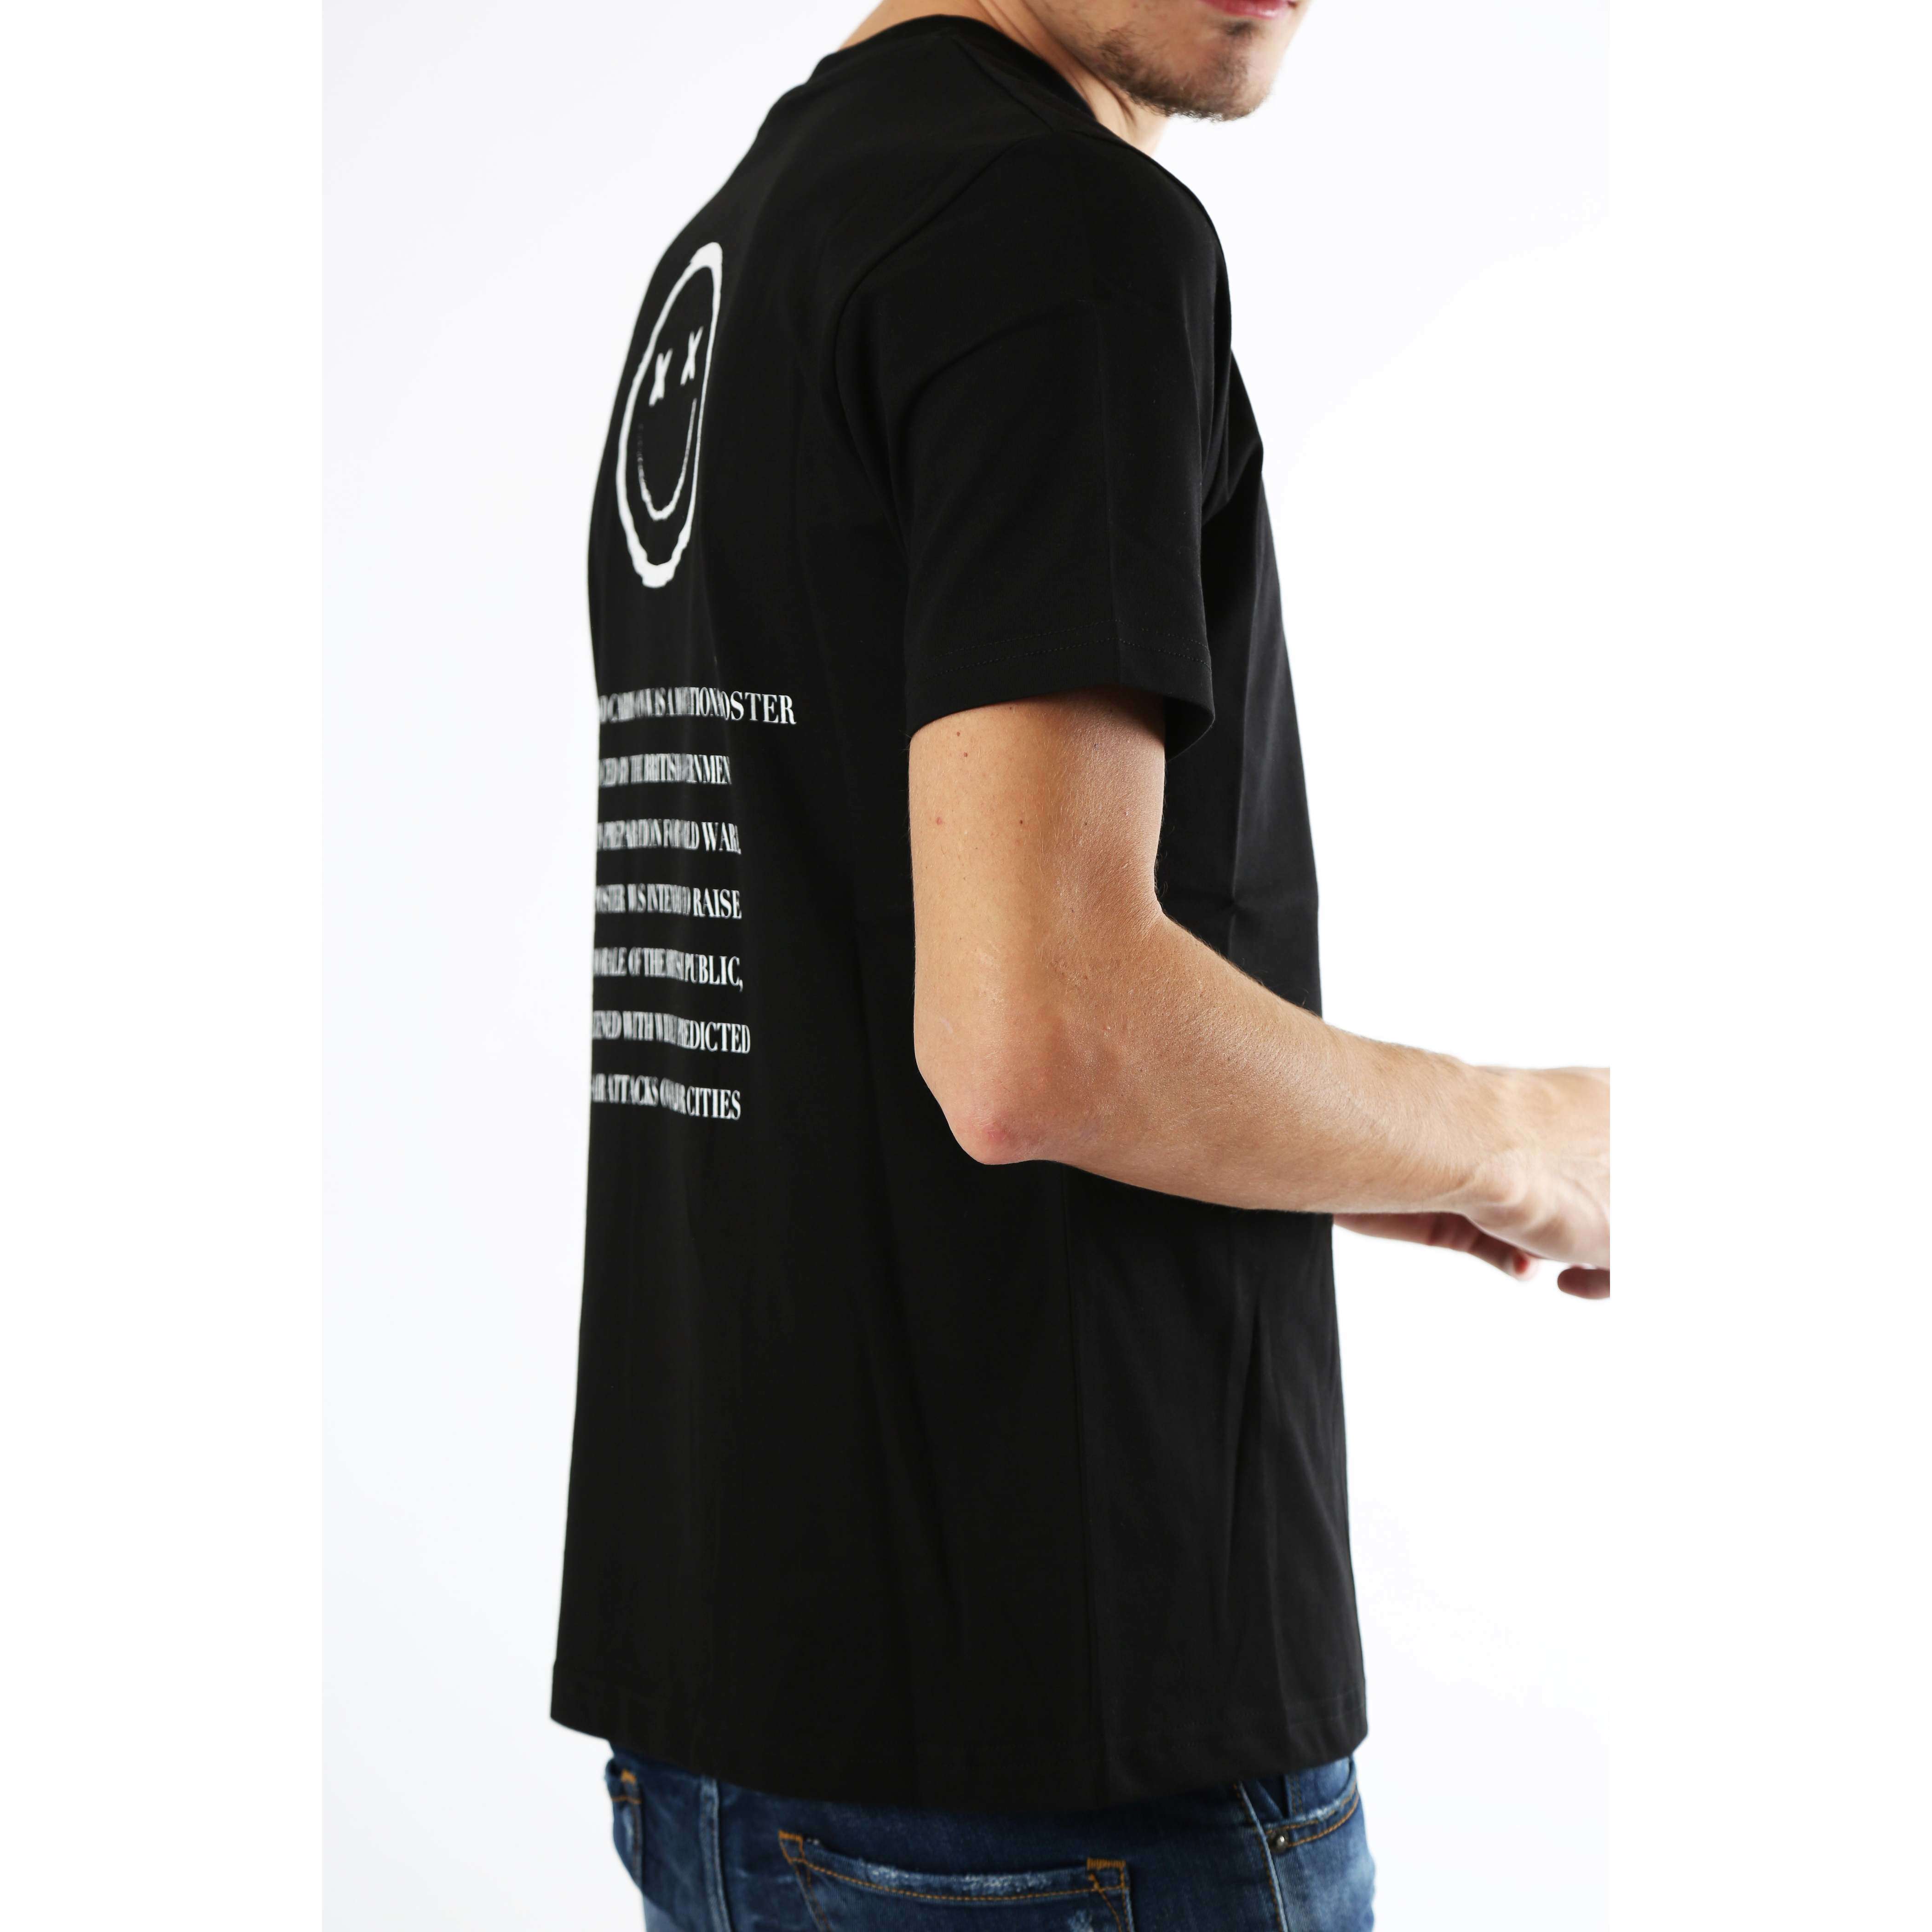 Fabrik London Uomo T-Shirt Smiley Black